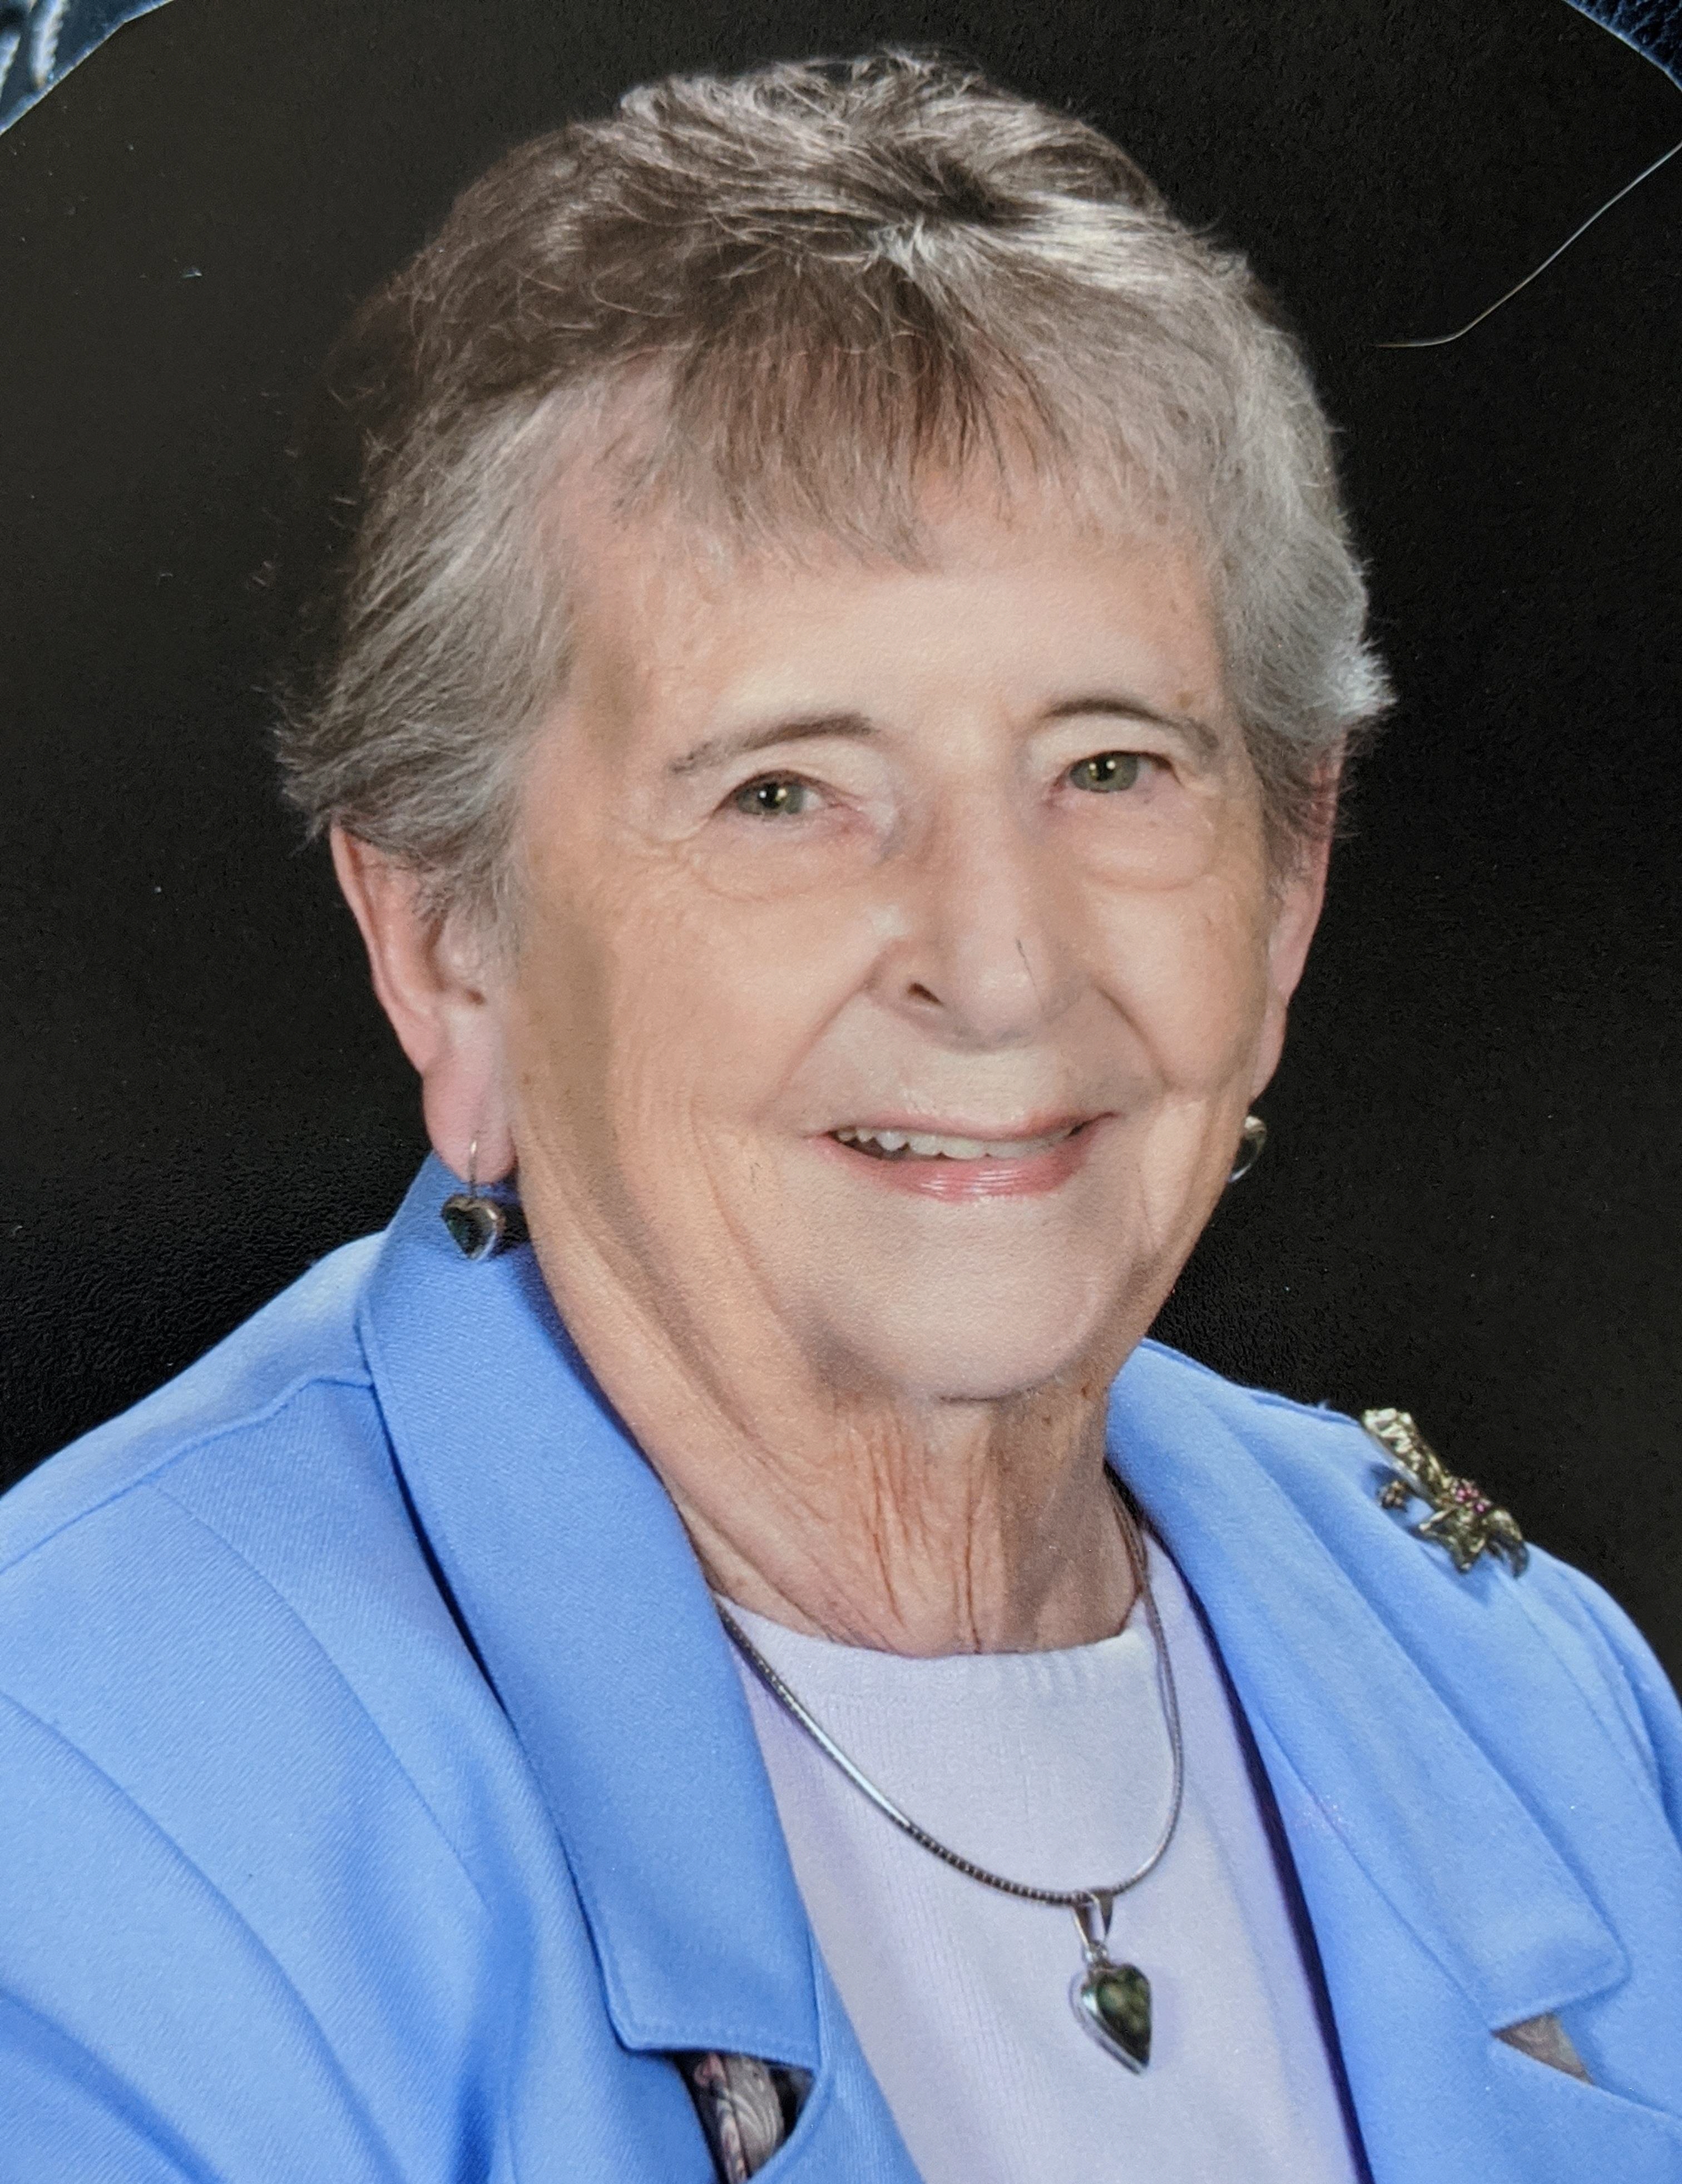 Obituary information for Julia Irene "Judy" Wood